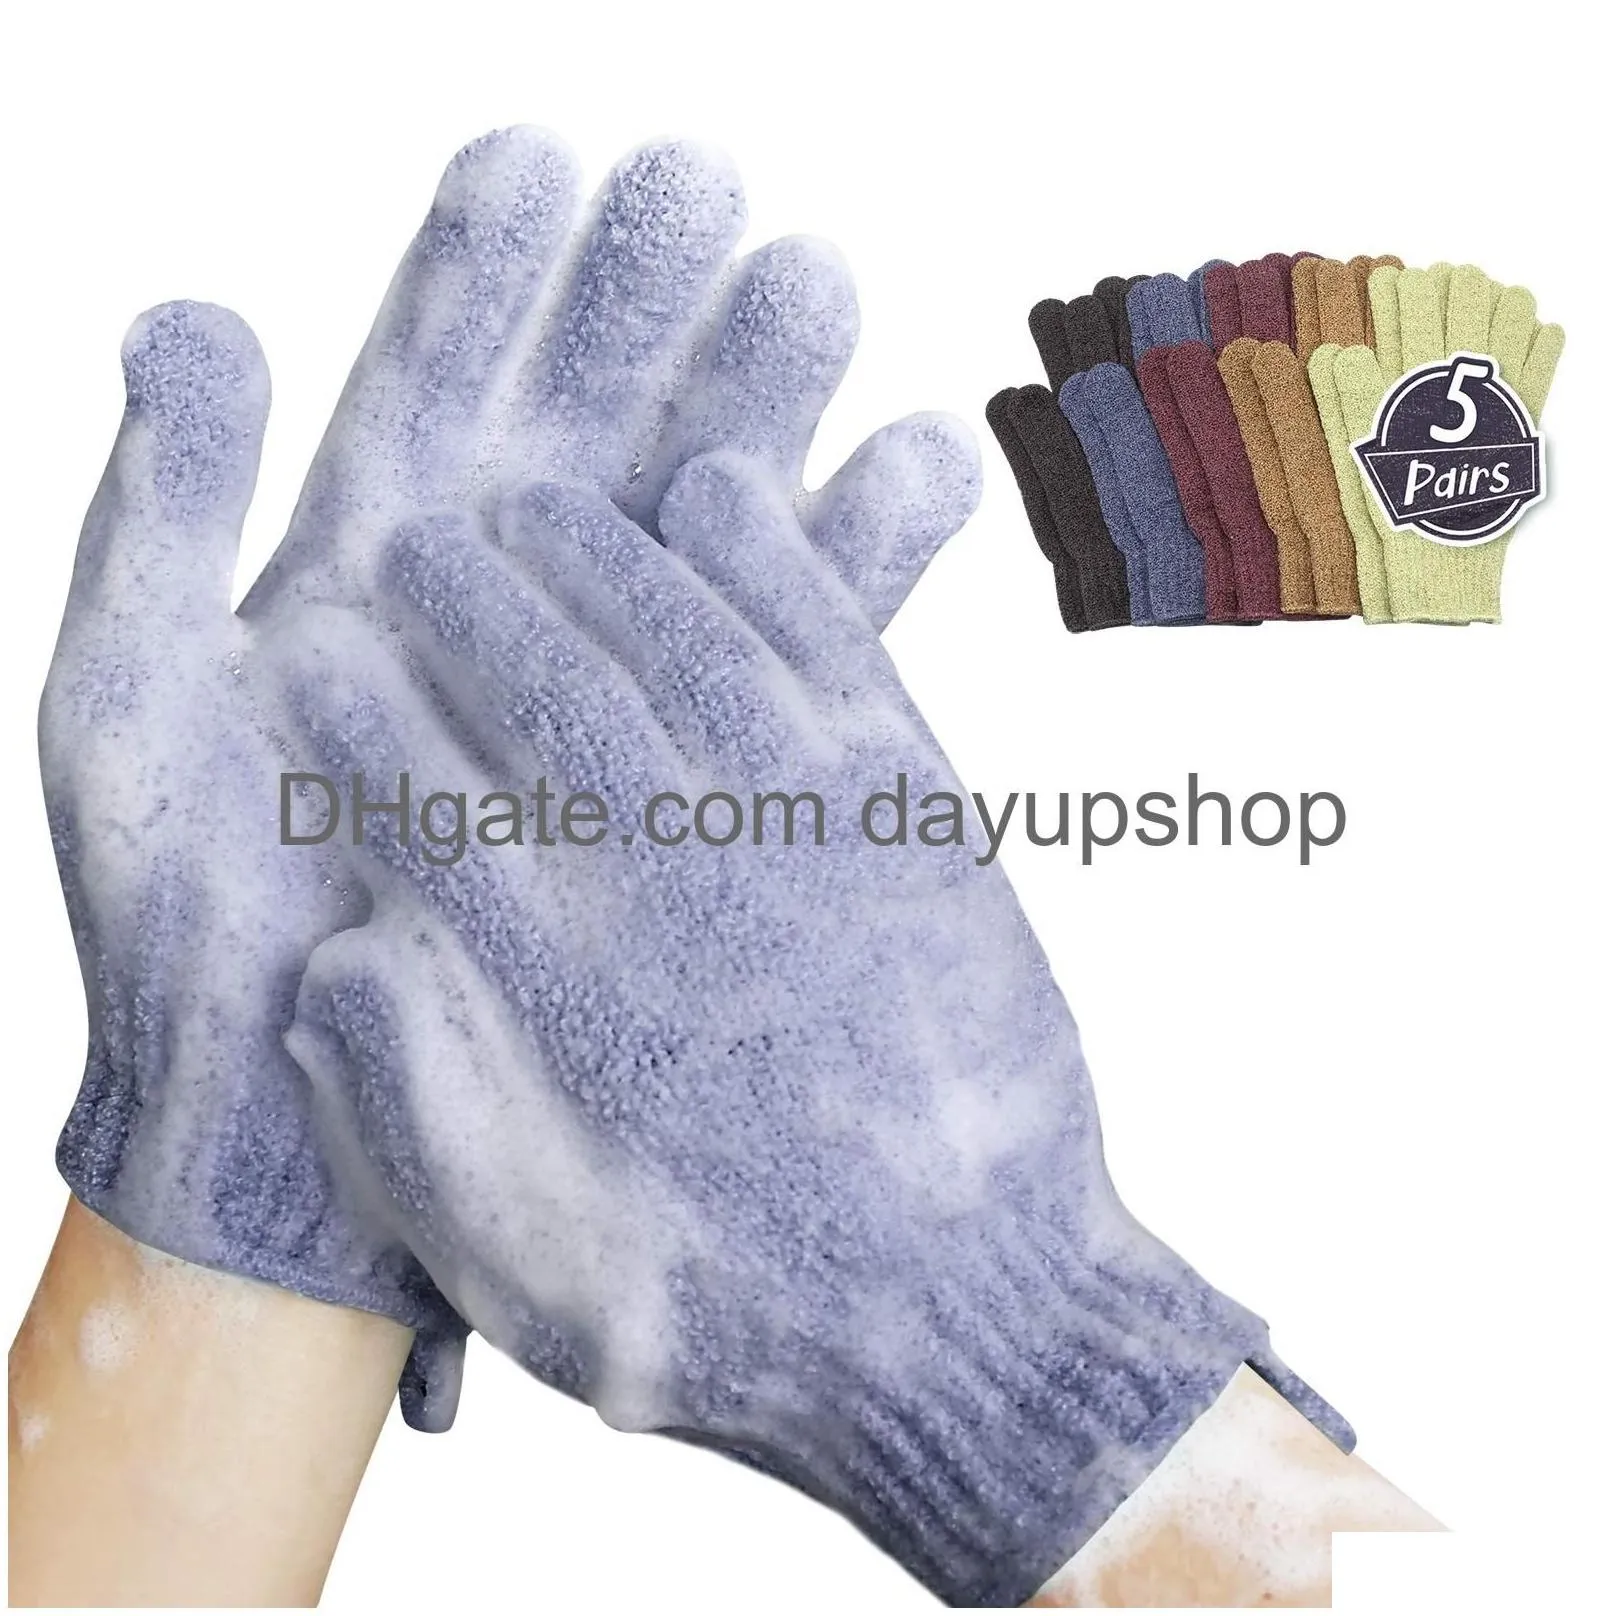 Cleaning Gloves Slick Exfoliating Skin Exfoliator For Body Shower Scrub Accessories Women Exfoliation Mitt Bath amCHE